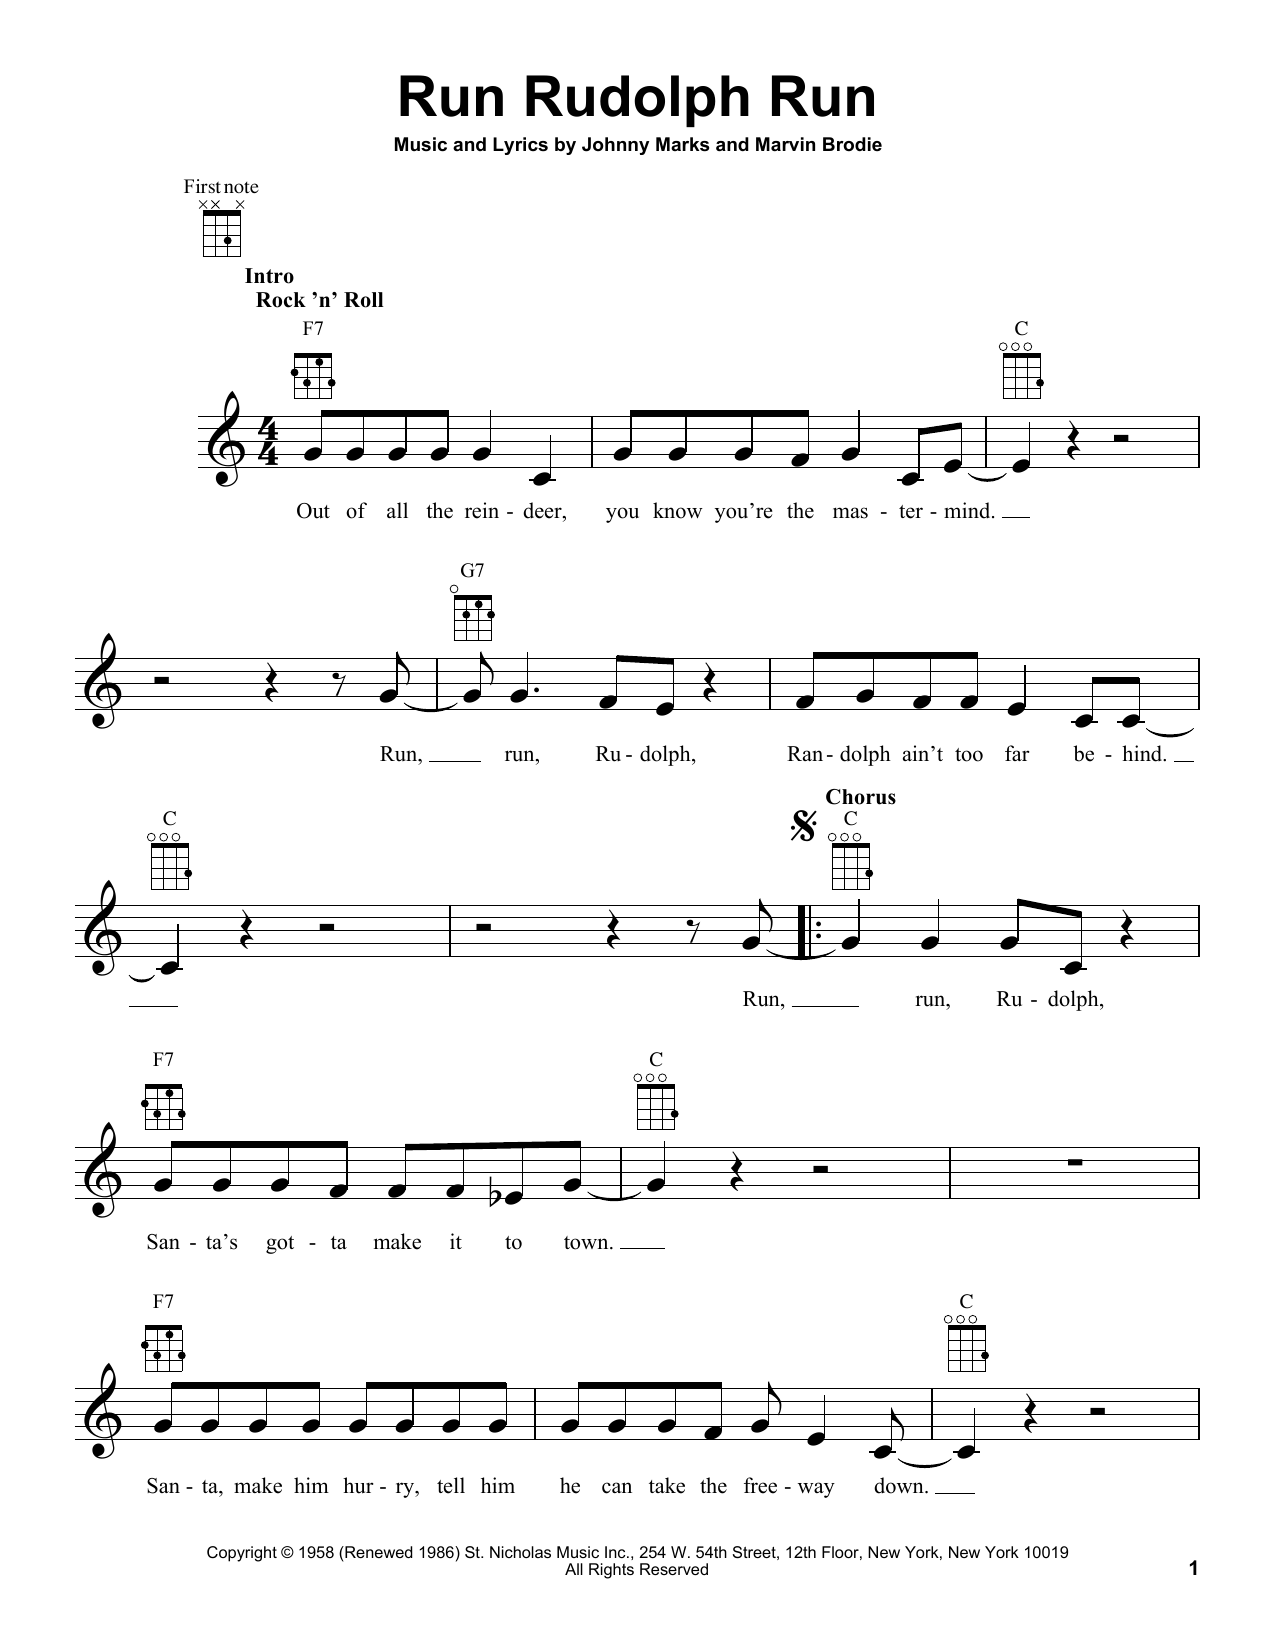 Johnny Marks Run Rudolph Run Sheet Music Notes & Chords for Guitar Lead Sheet - Download or Print PDF